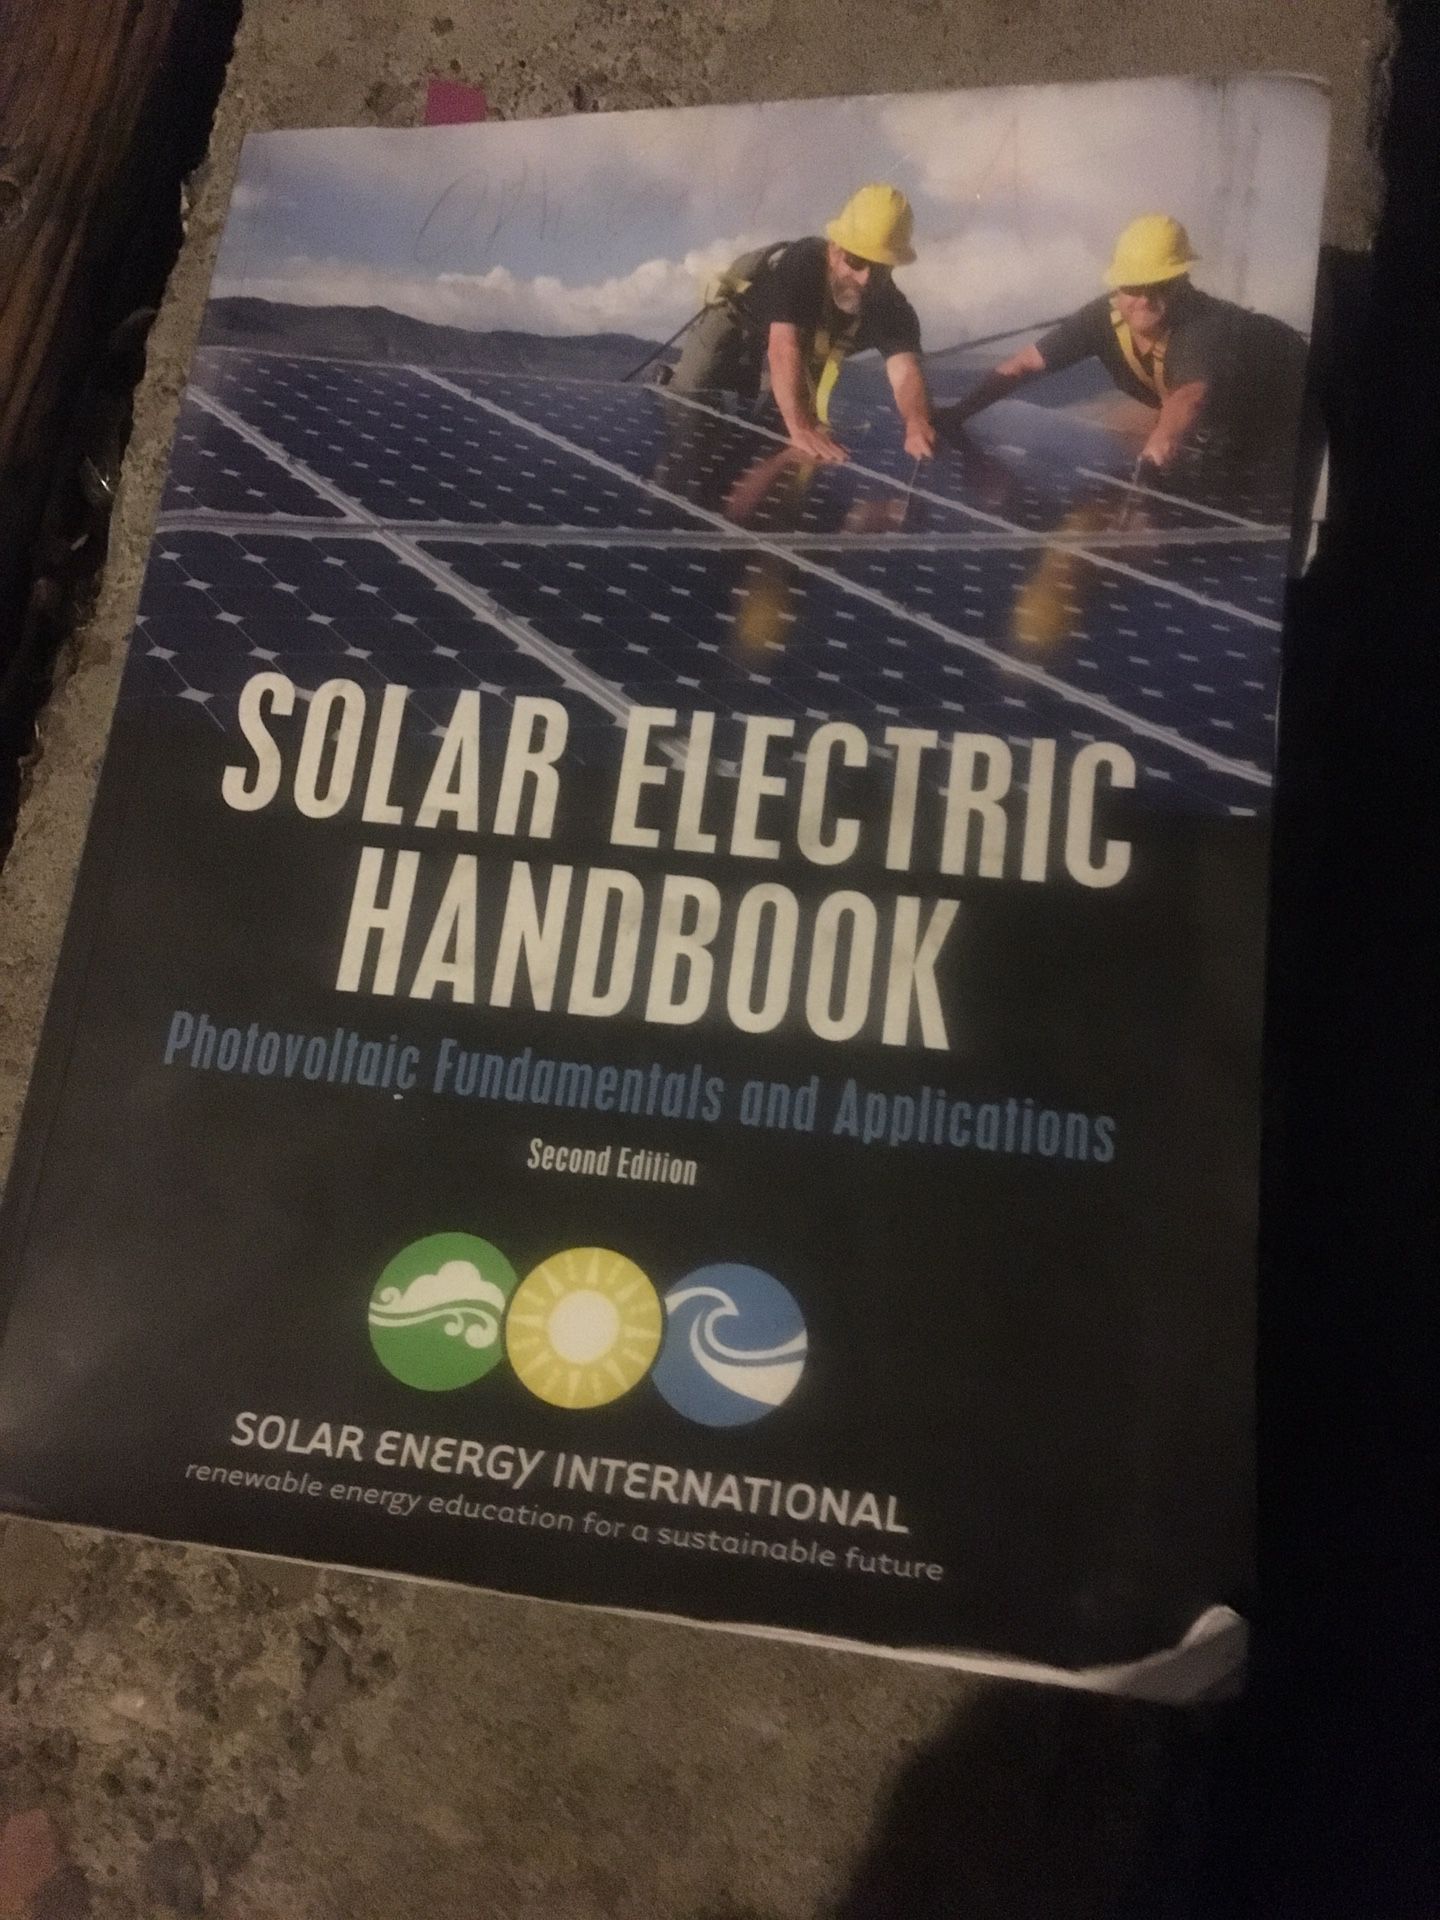 Solar electric handbook photovoltaic fundamentals and applications